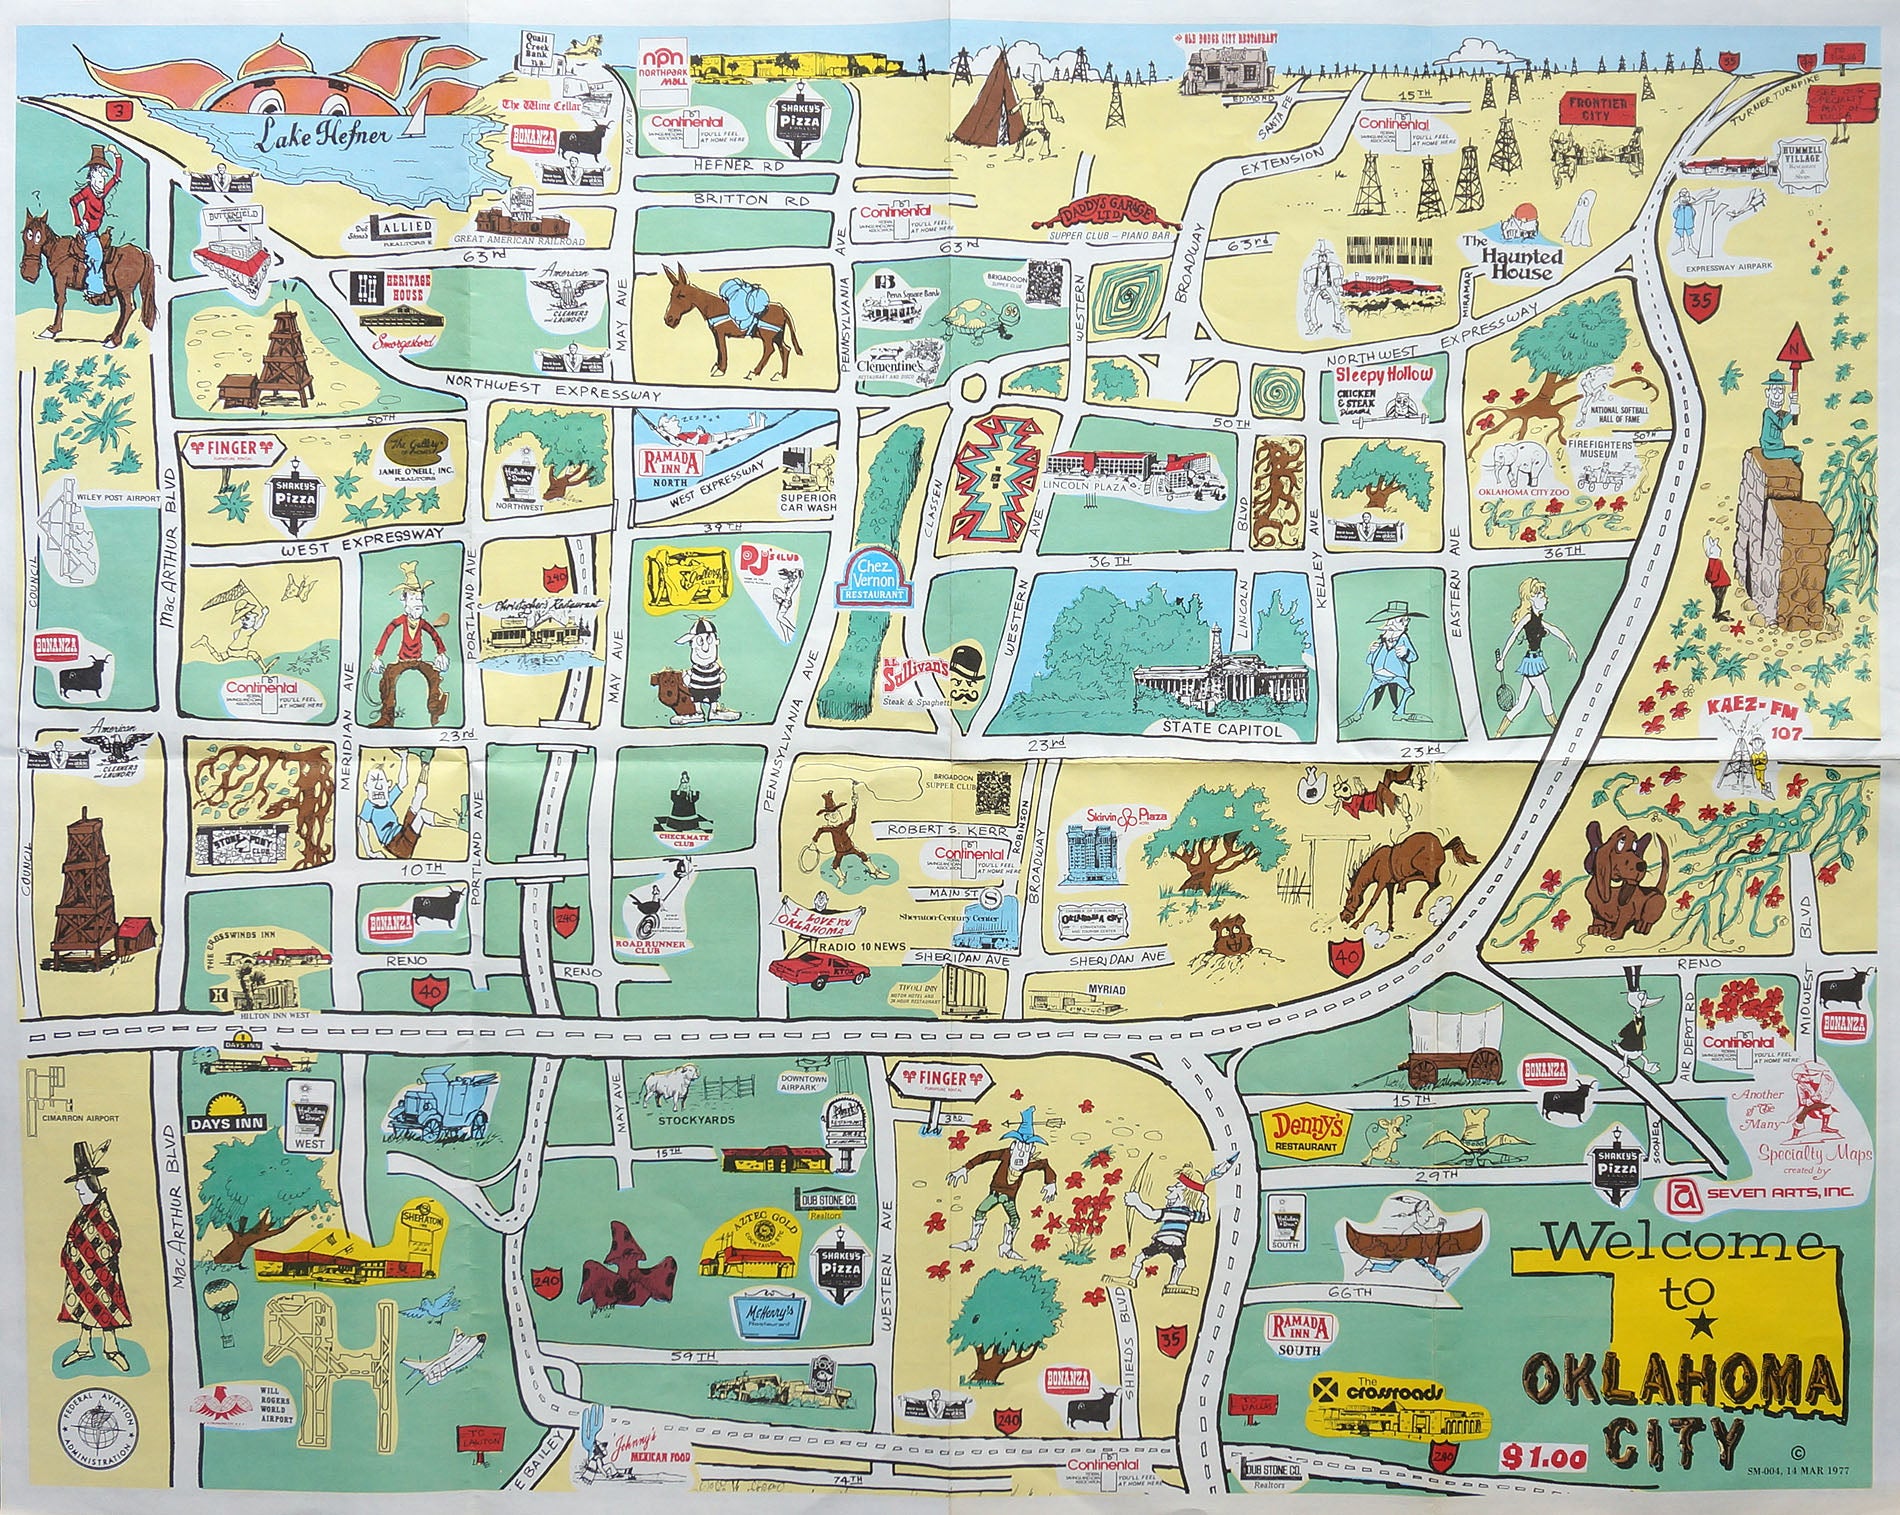 (OK.-OKC.) Welcome to Oklahoma City